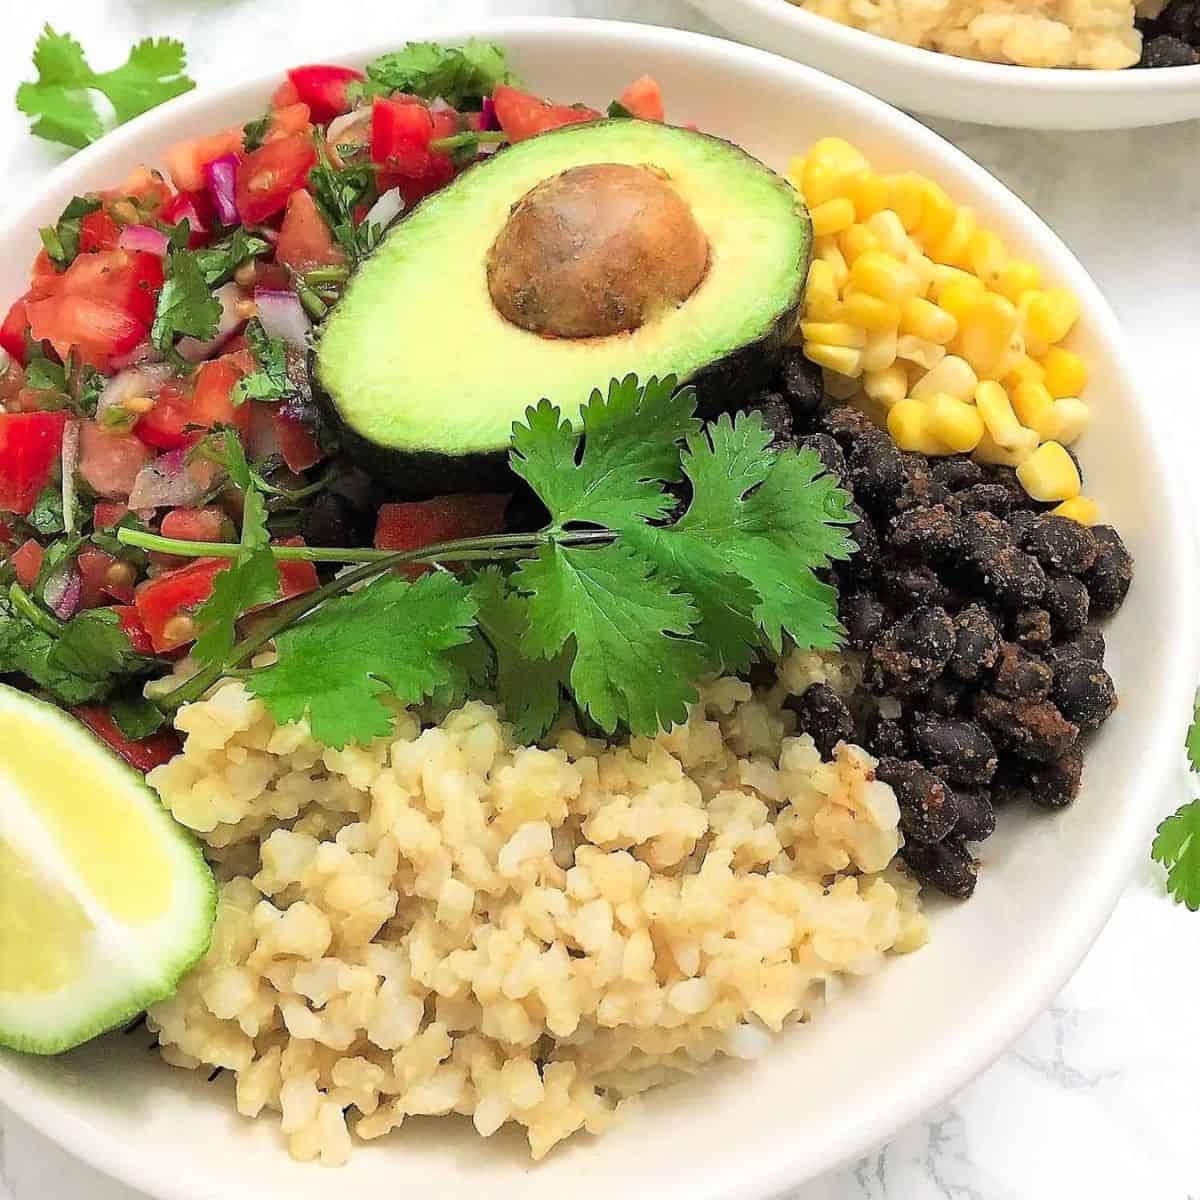 Bowl of rice, black beans, corn, tomato salad and avocado.